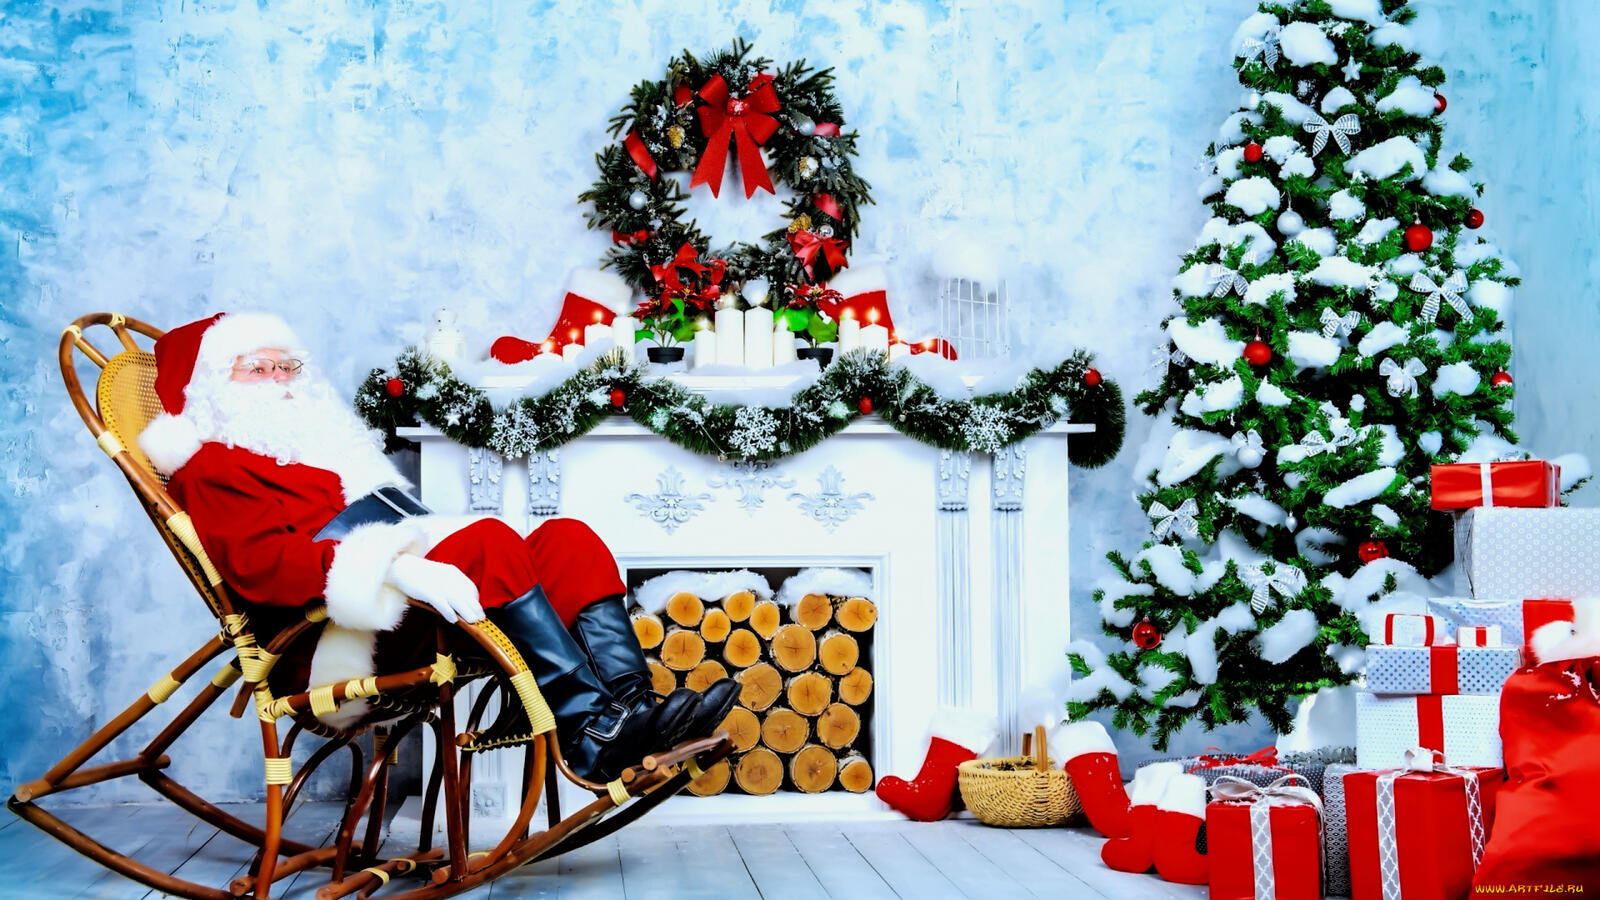 Free photo Santa on a rocking chair next to the Christmas tree